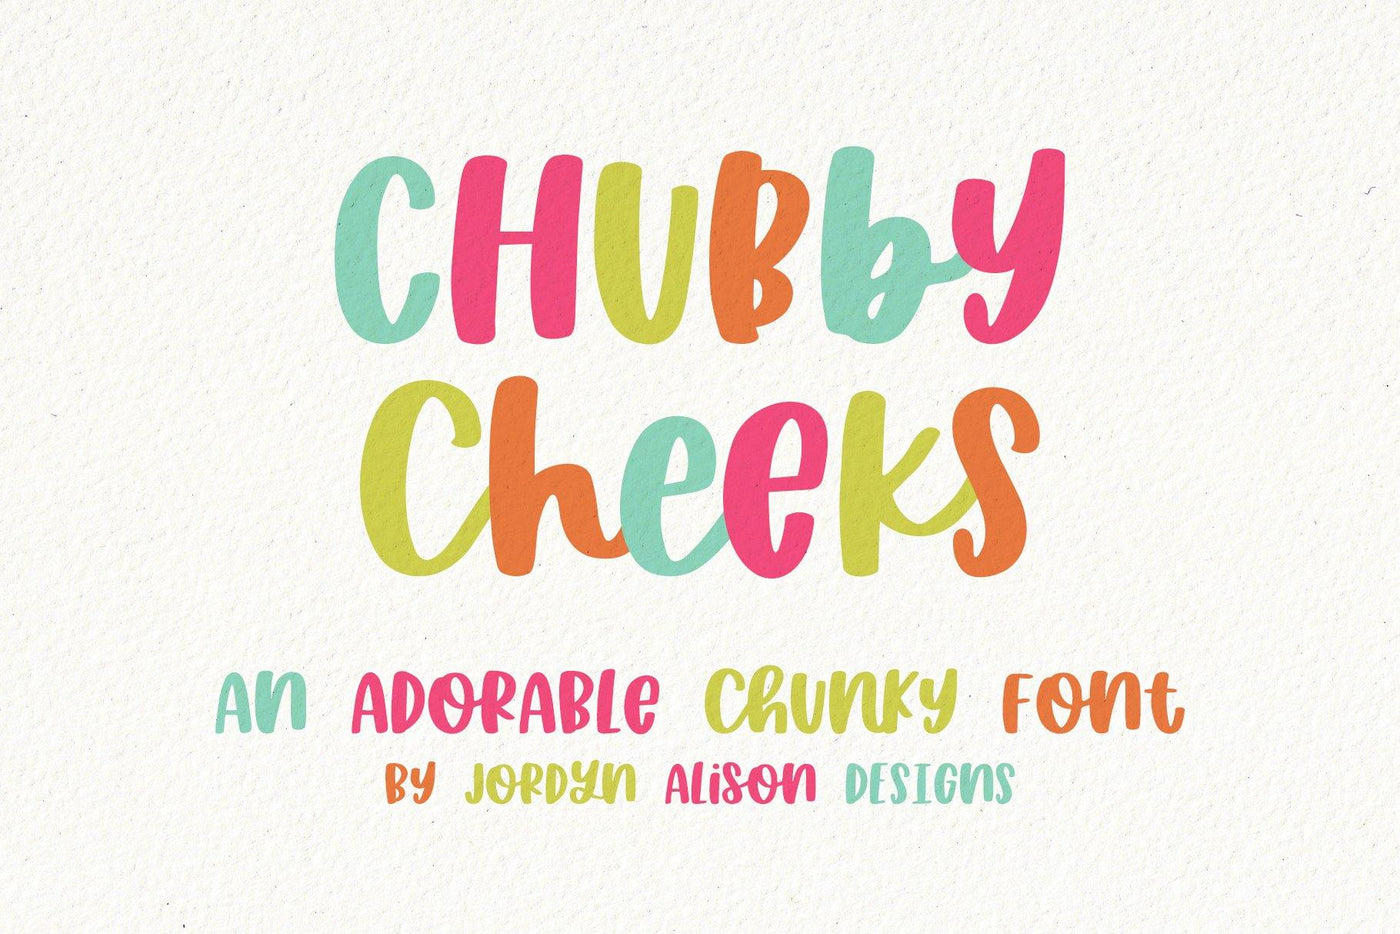 Chubby Cheeks Font - JordynAlisonDesigns